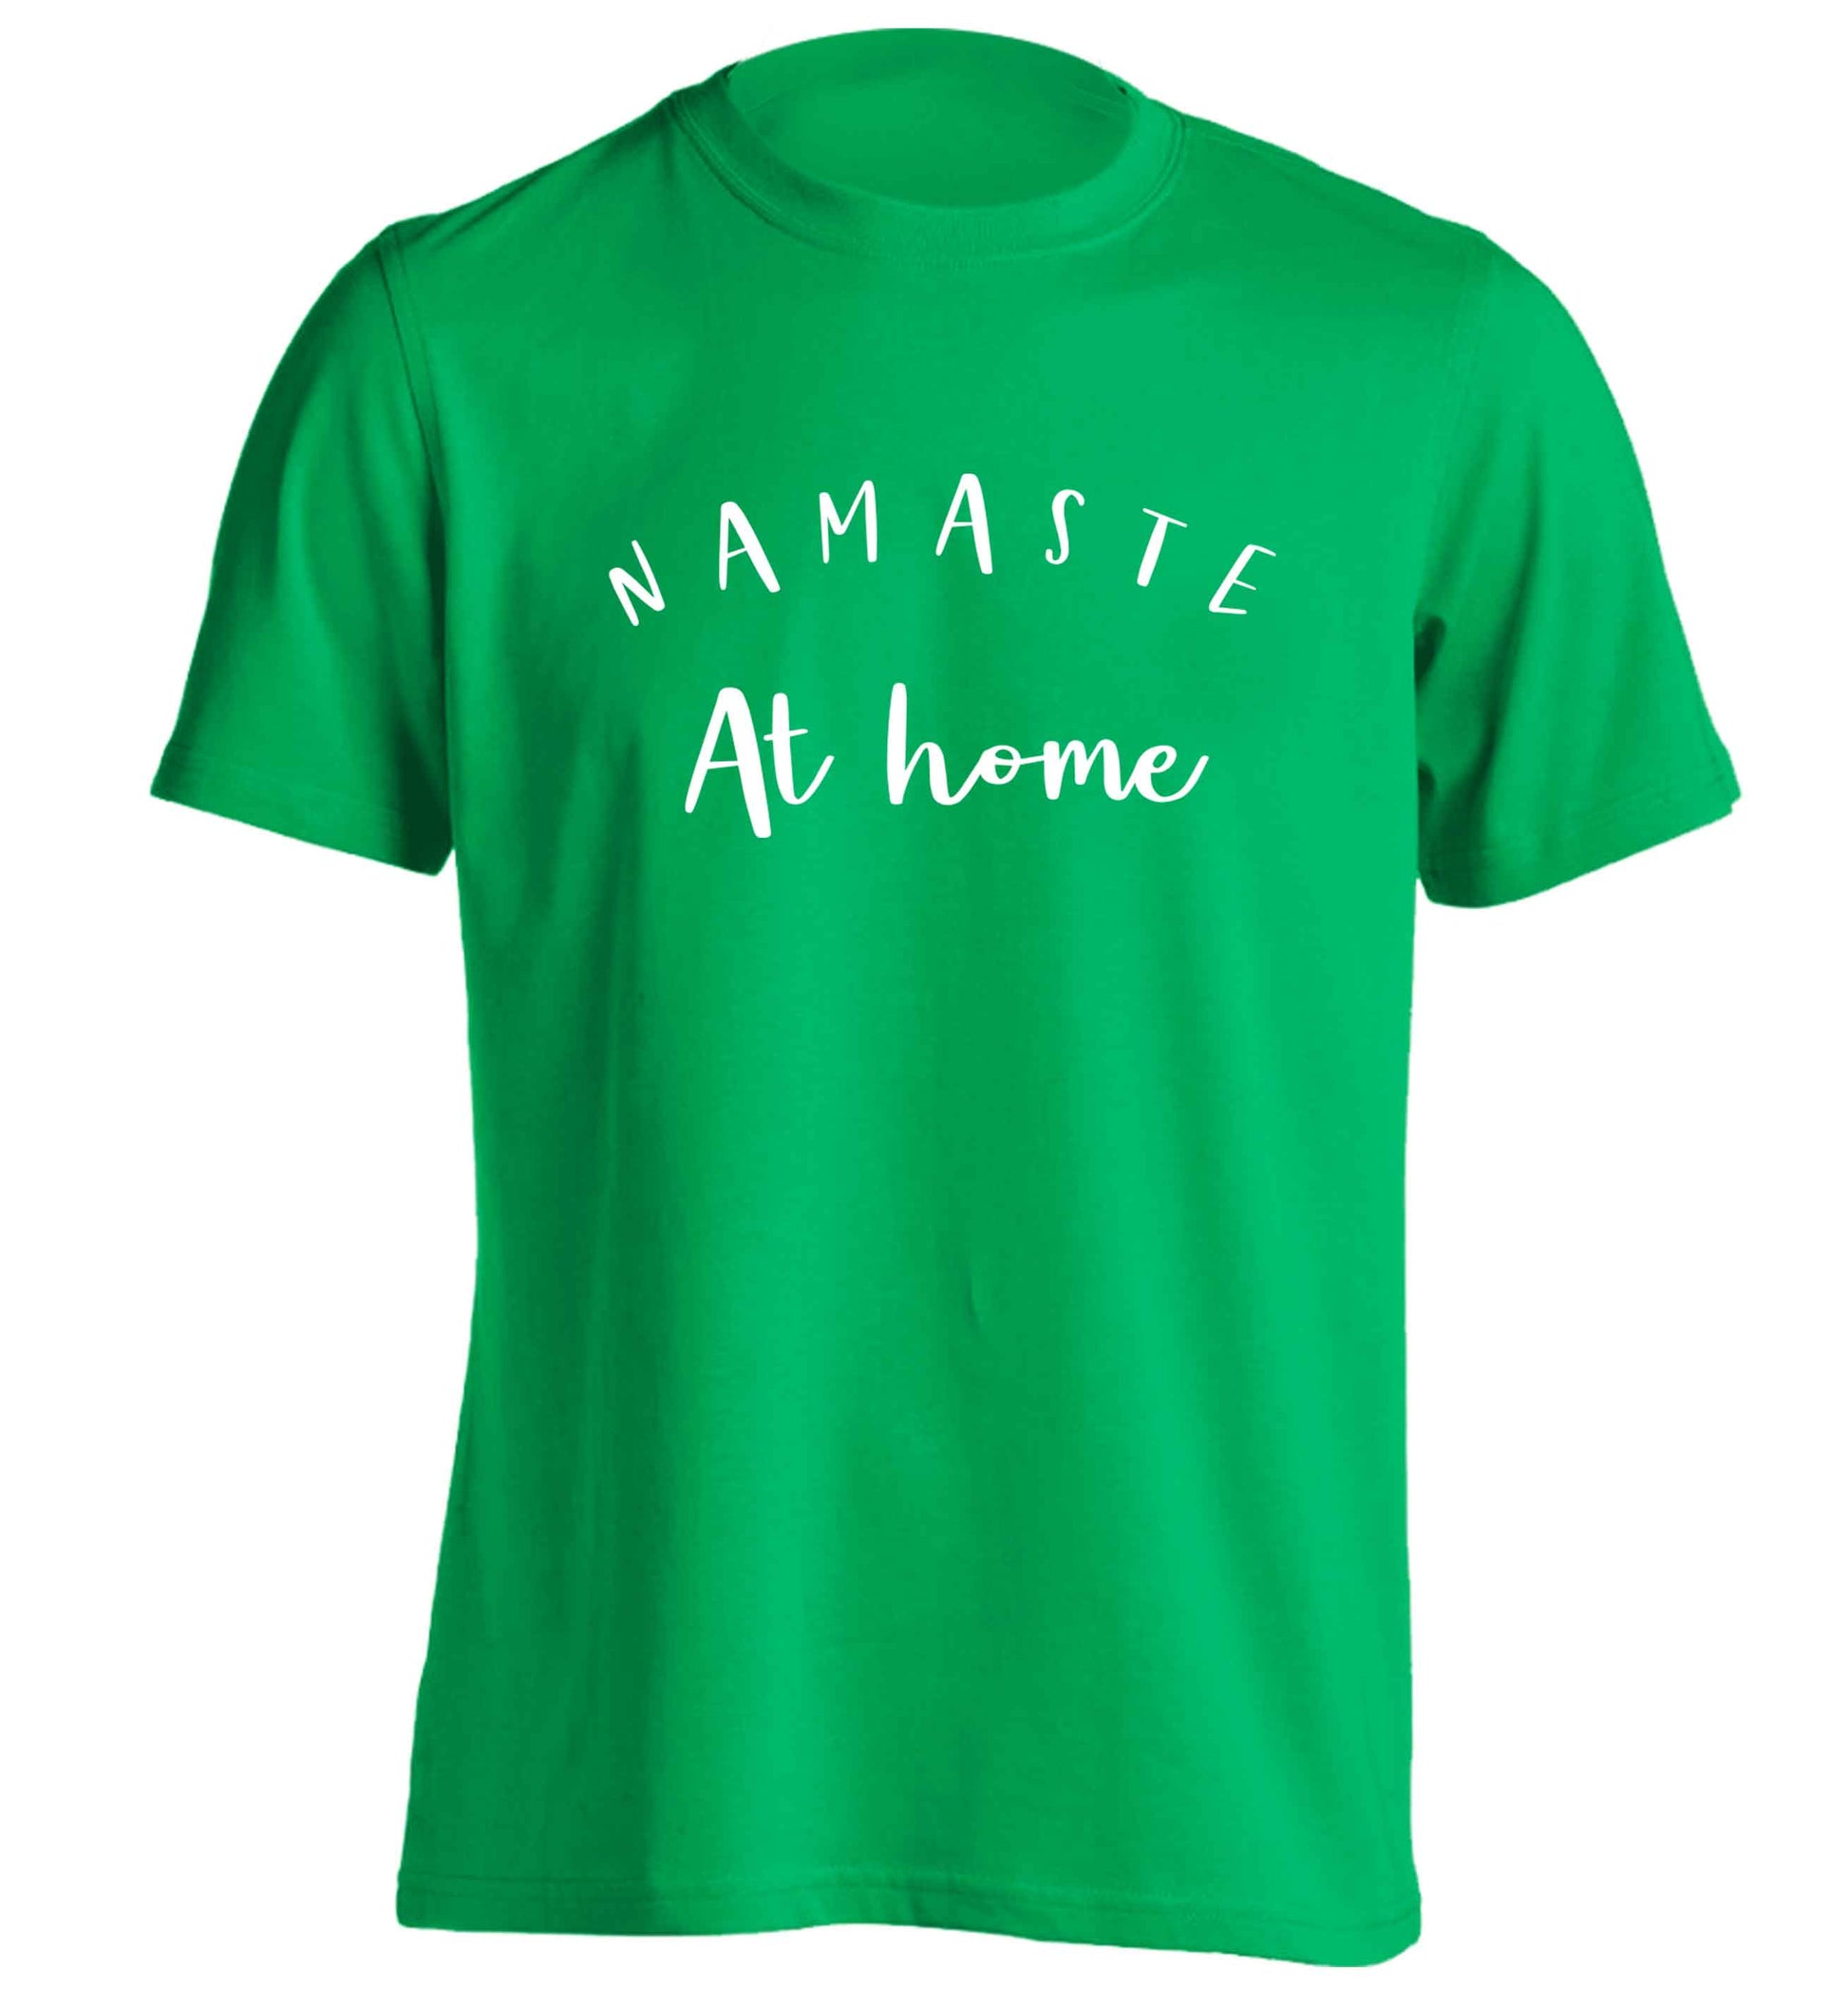 Namaste at home adults unisex green Tshirt 2XL